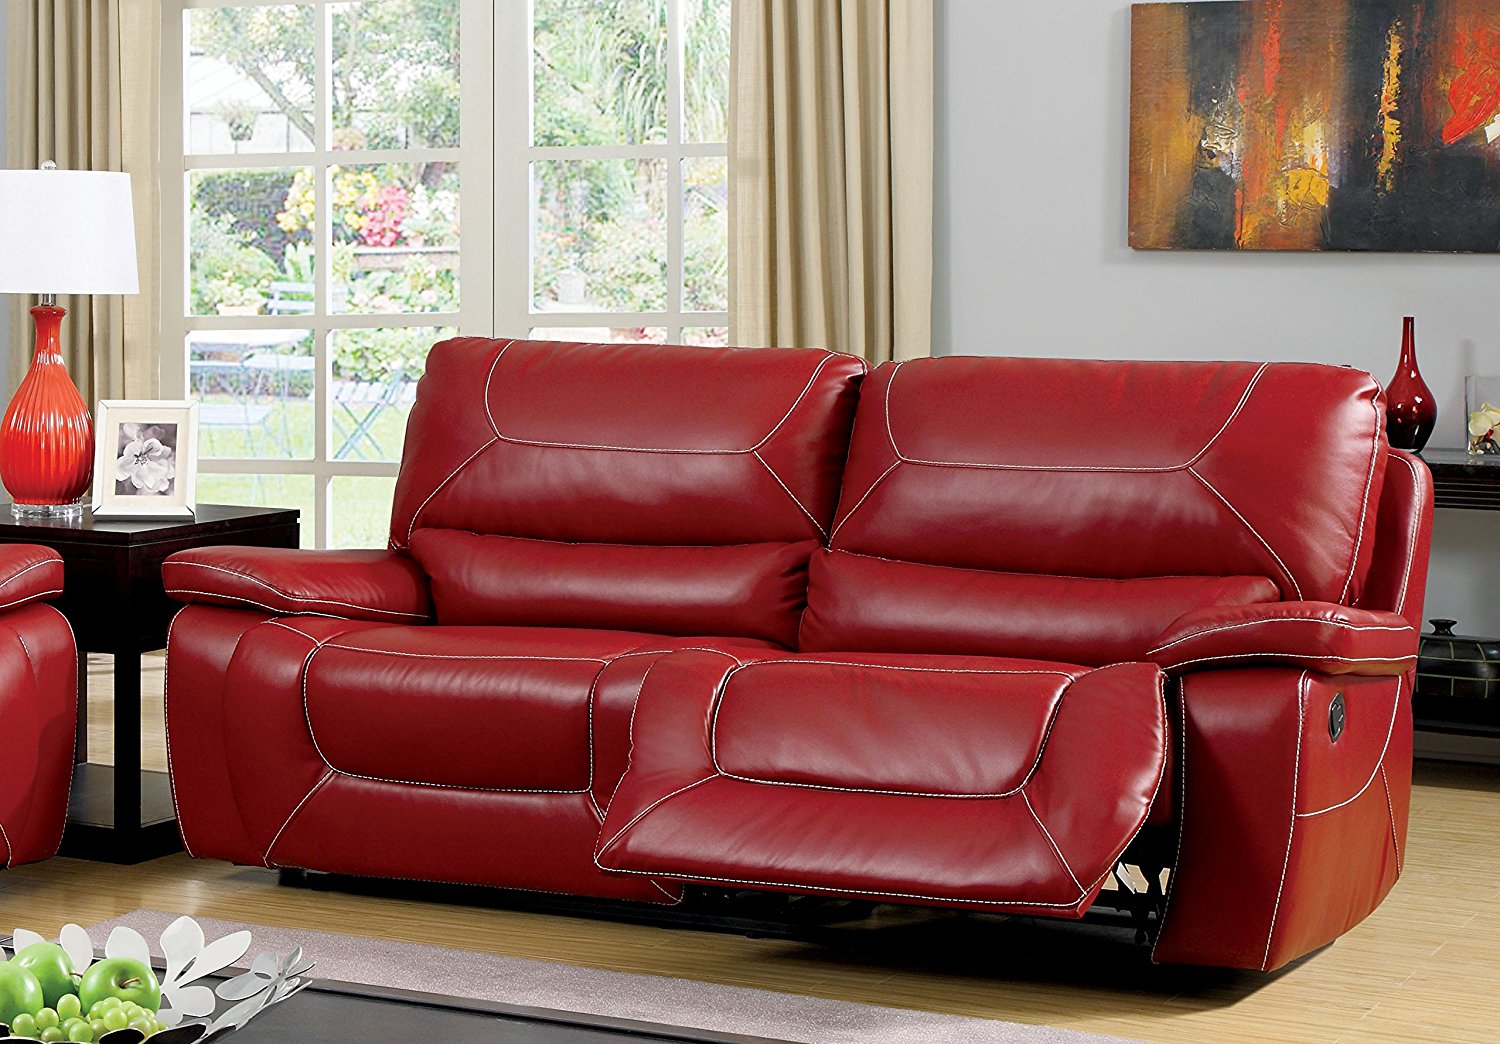 Furniture of America Dunham 2-Recliner Sofa, Red